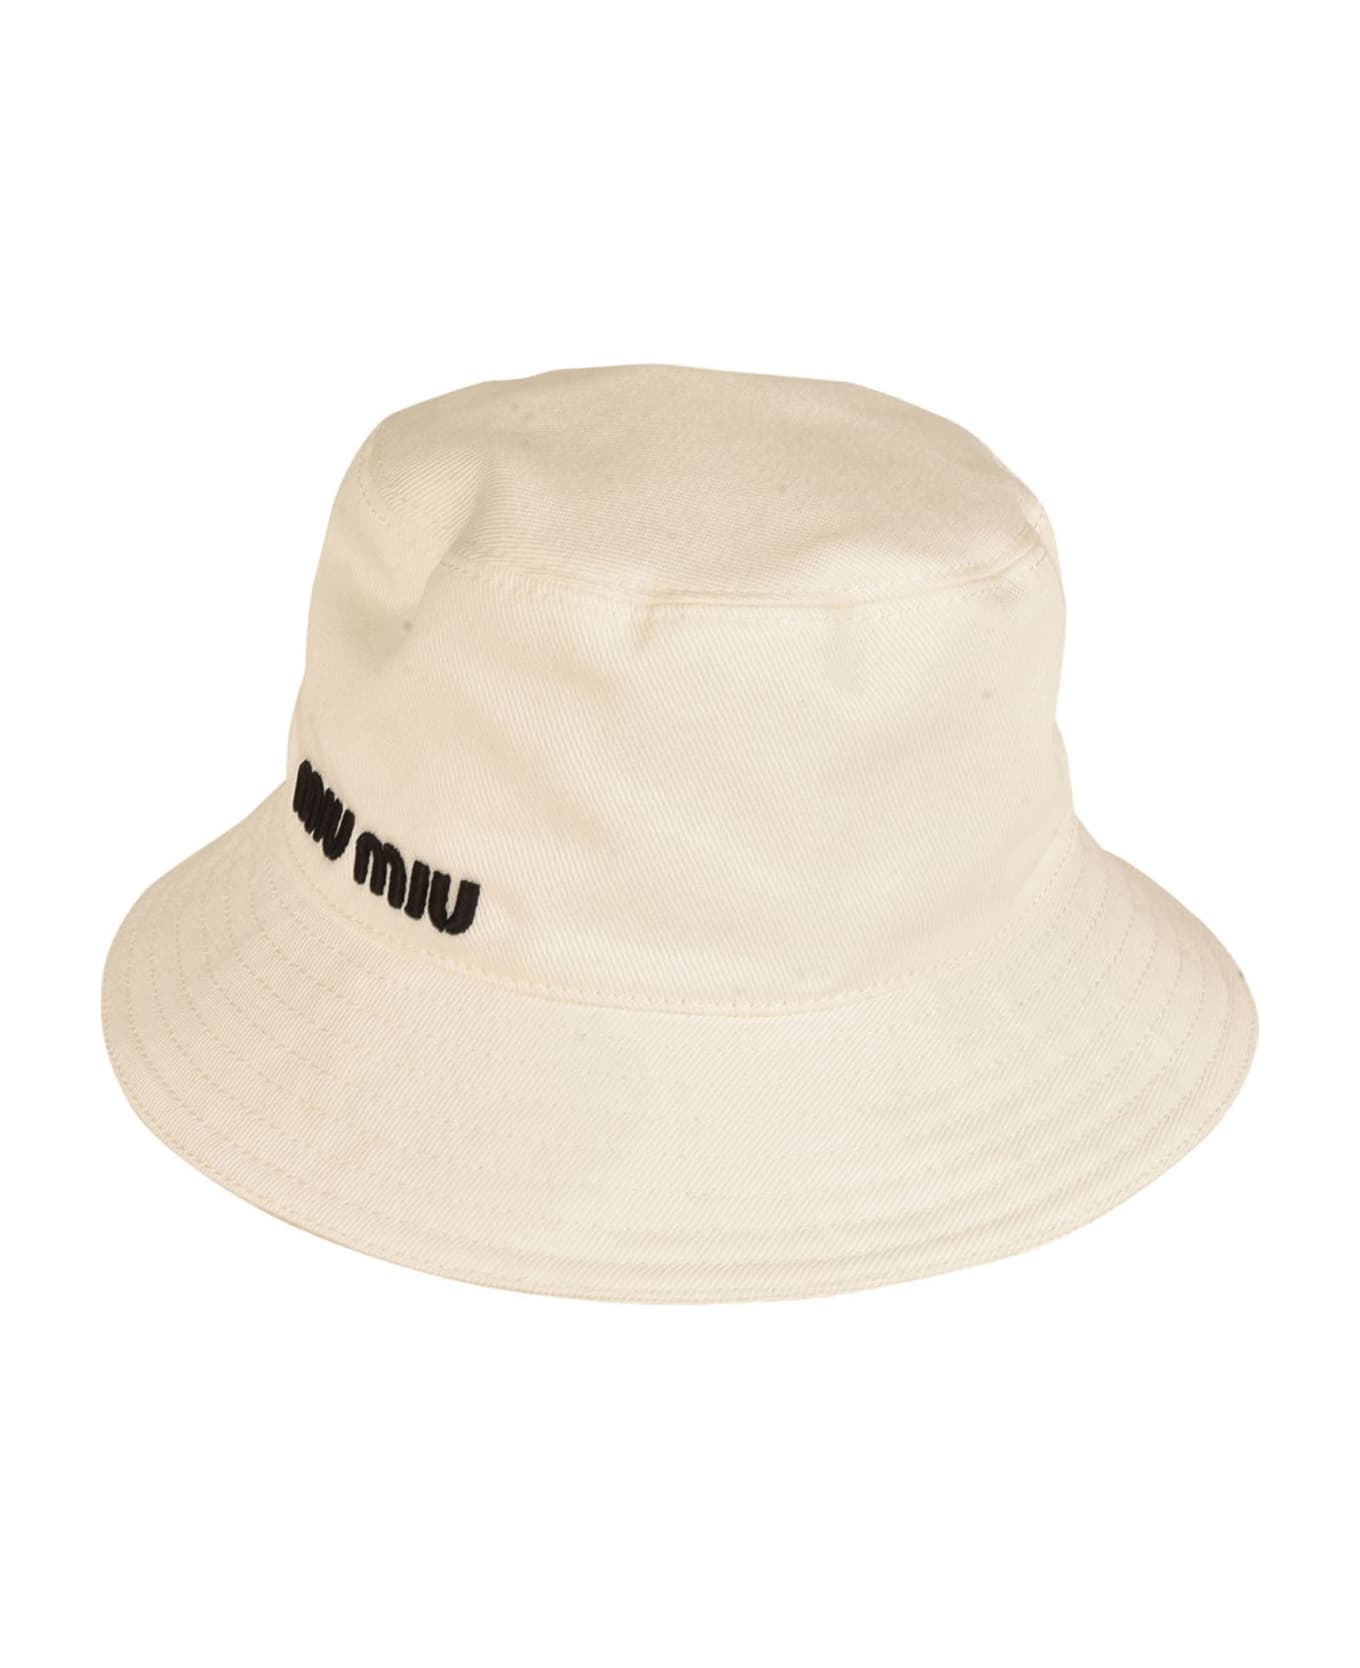 Miu Miu Logo Embroidered Bucket Hat - White/Black